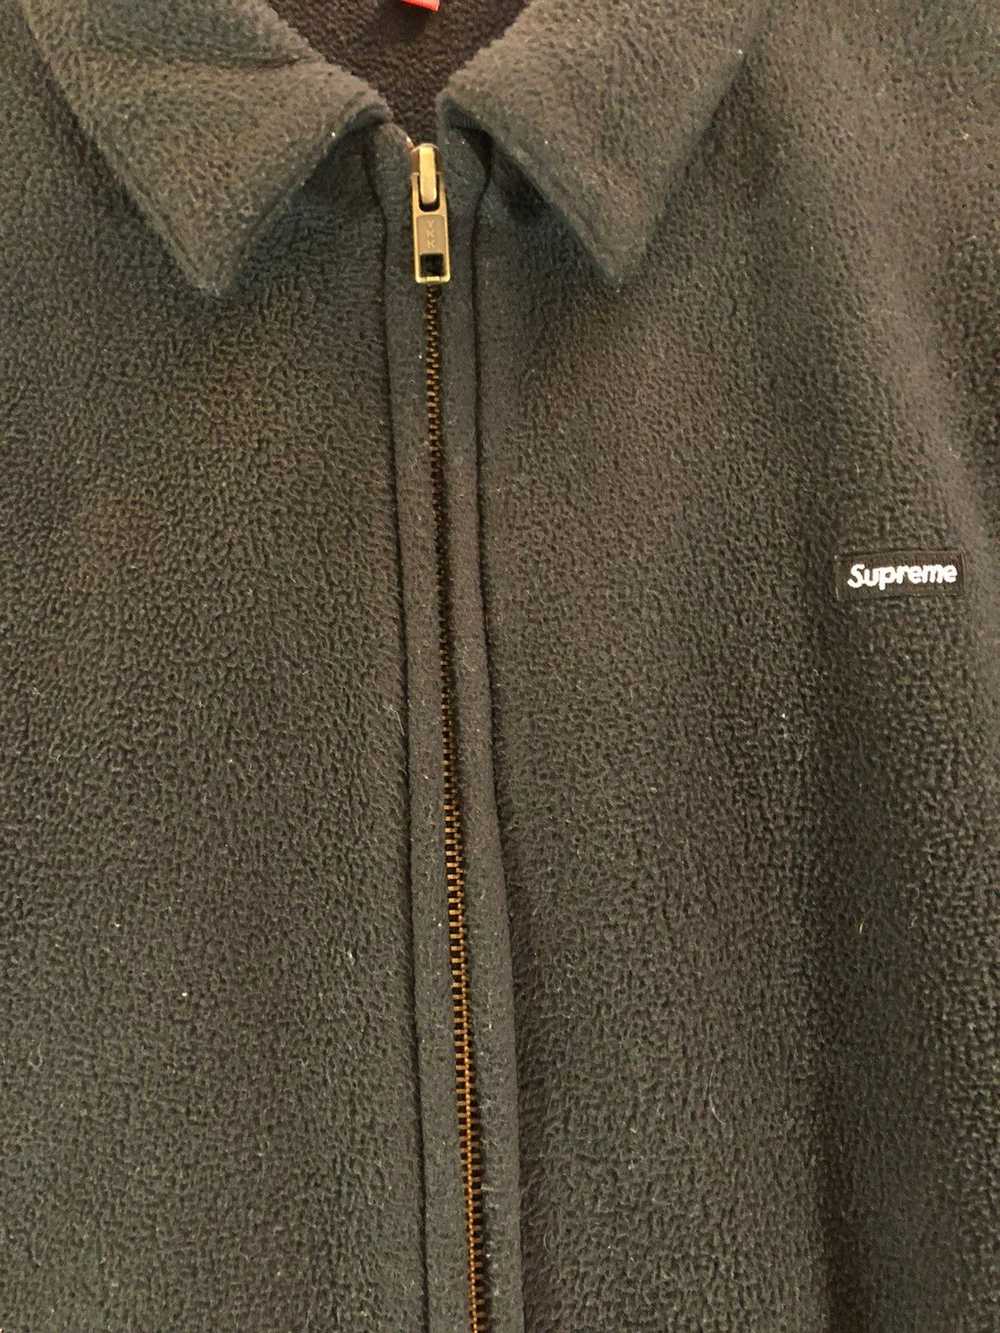 Supreme Supreme polartec fleece collar jacket - image 6